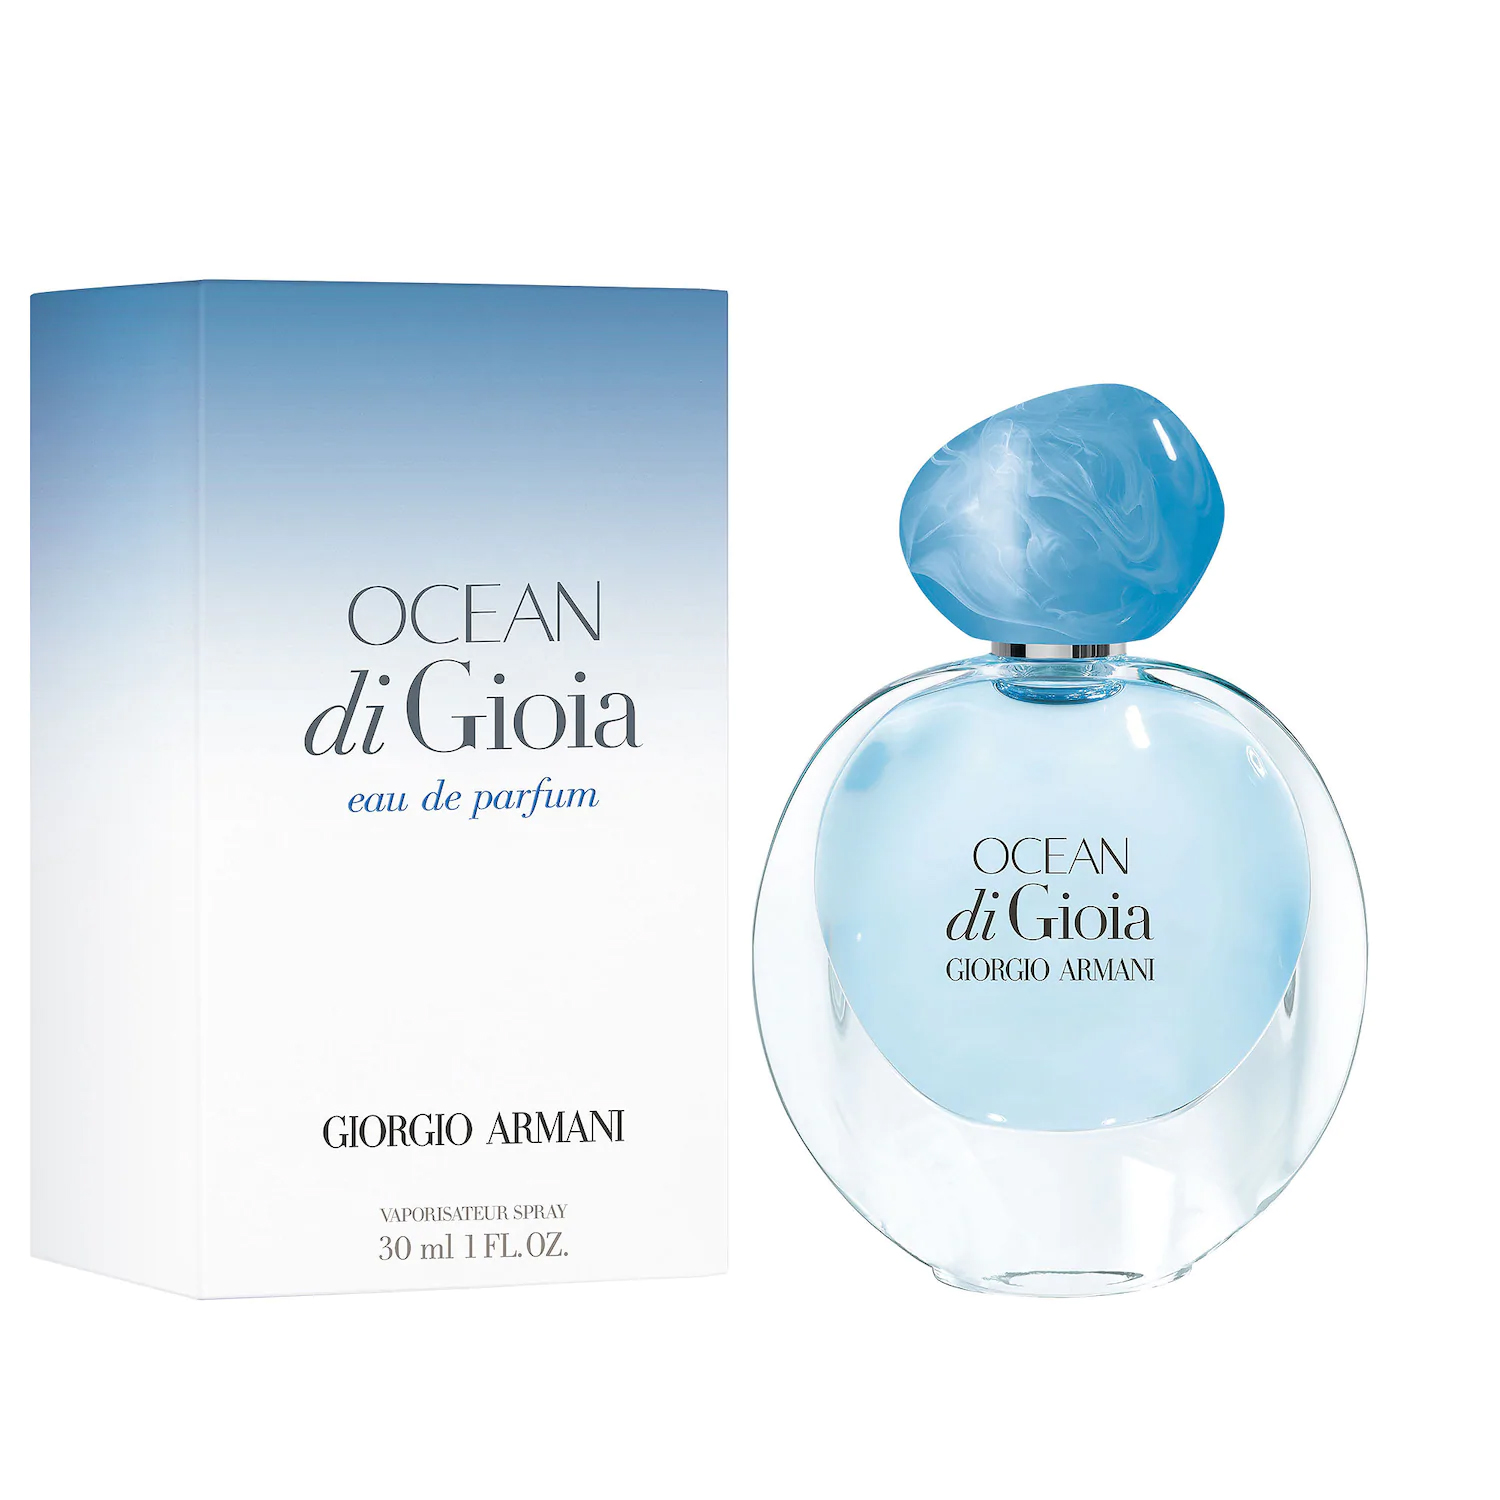 Ocean di Gioia Armani perfume a new fragrance